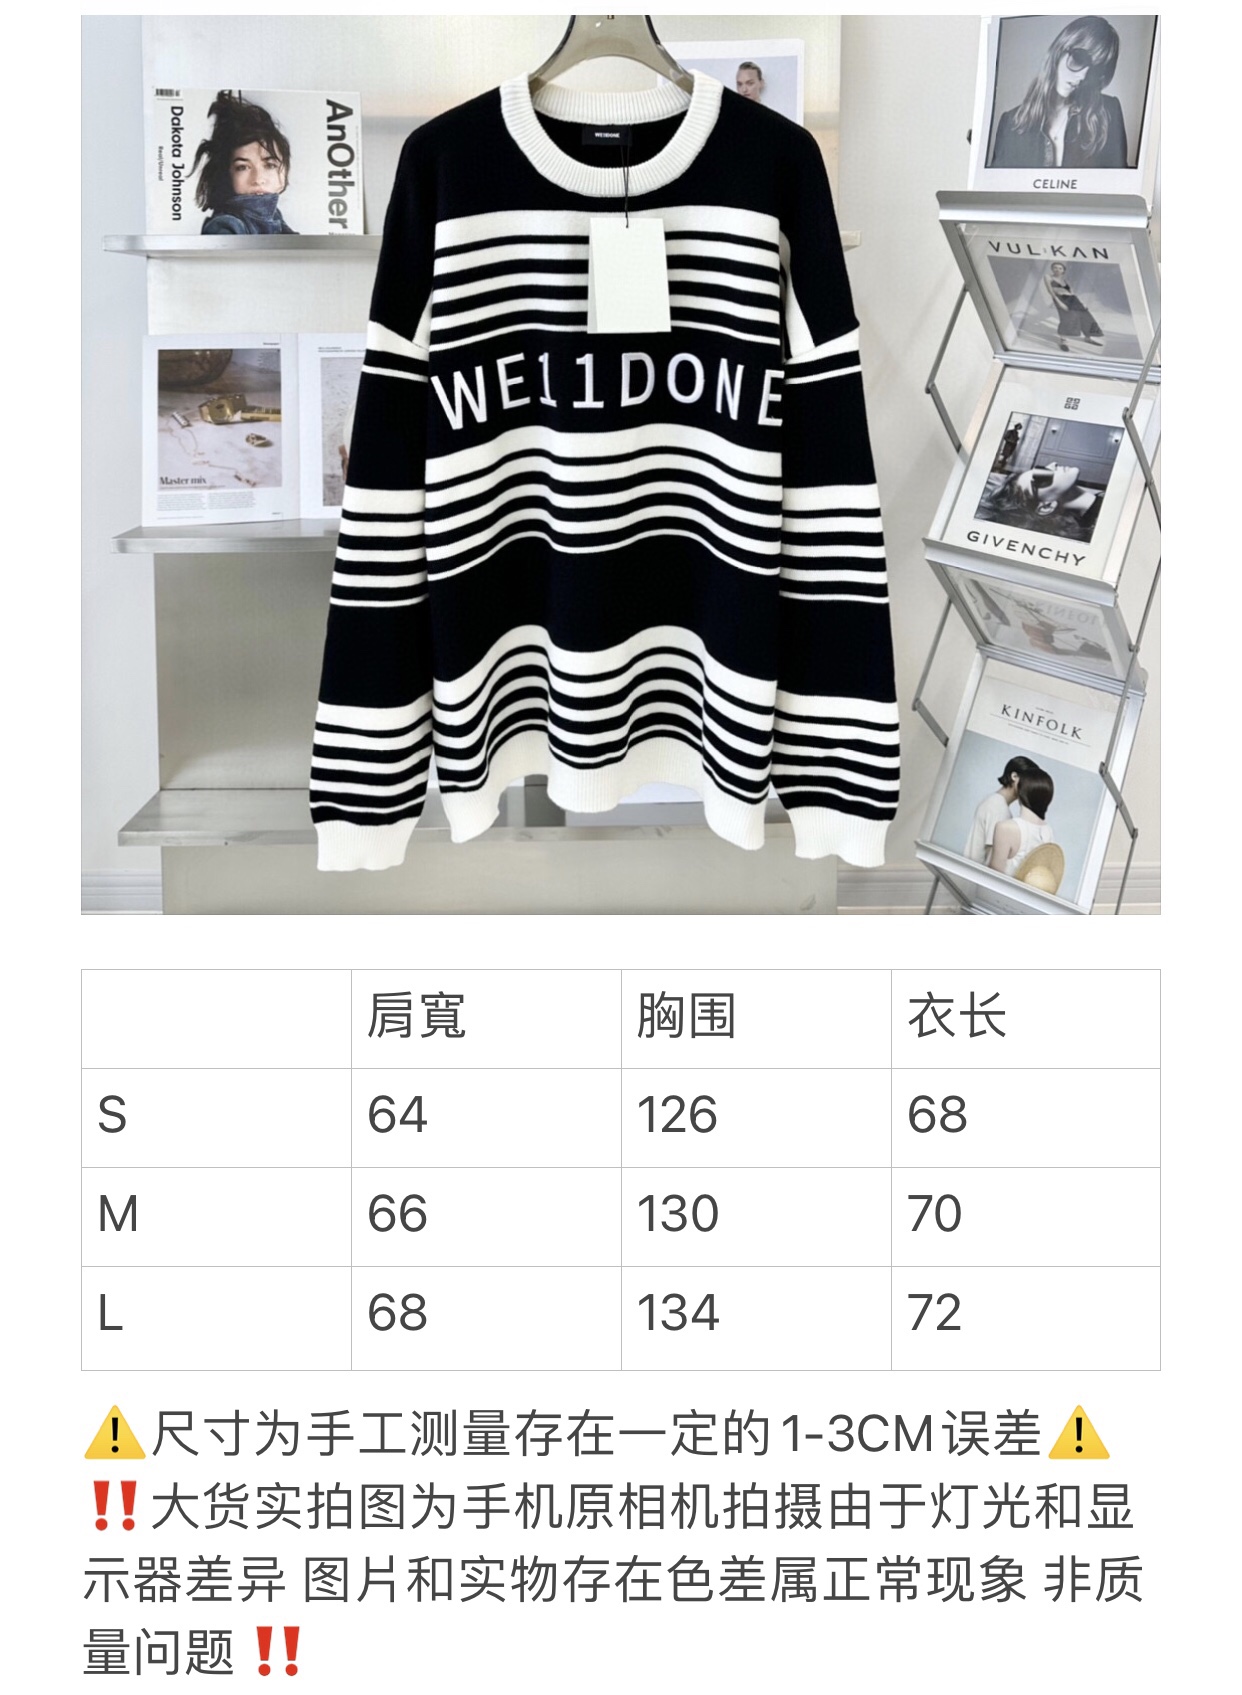 WE11DONE 超激得新品 ウェルダン 日本語ｎ級品 暖かい セーター ニット トップス 縞 ゆったリ ブラック_9